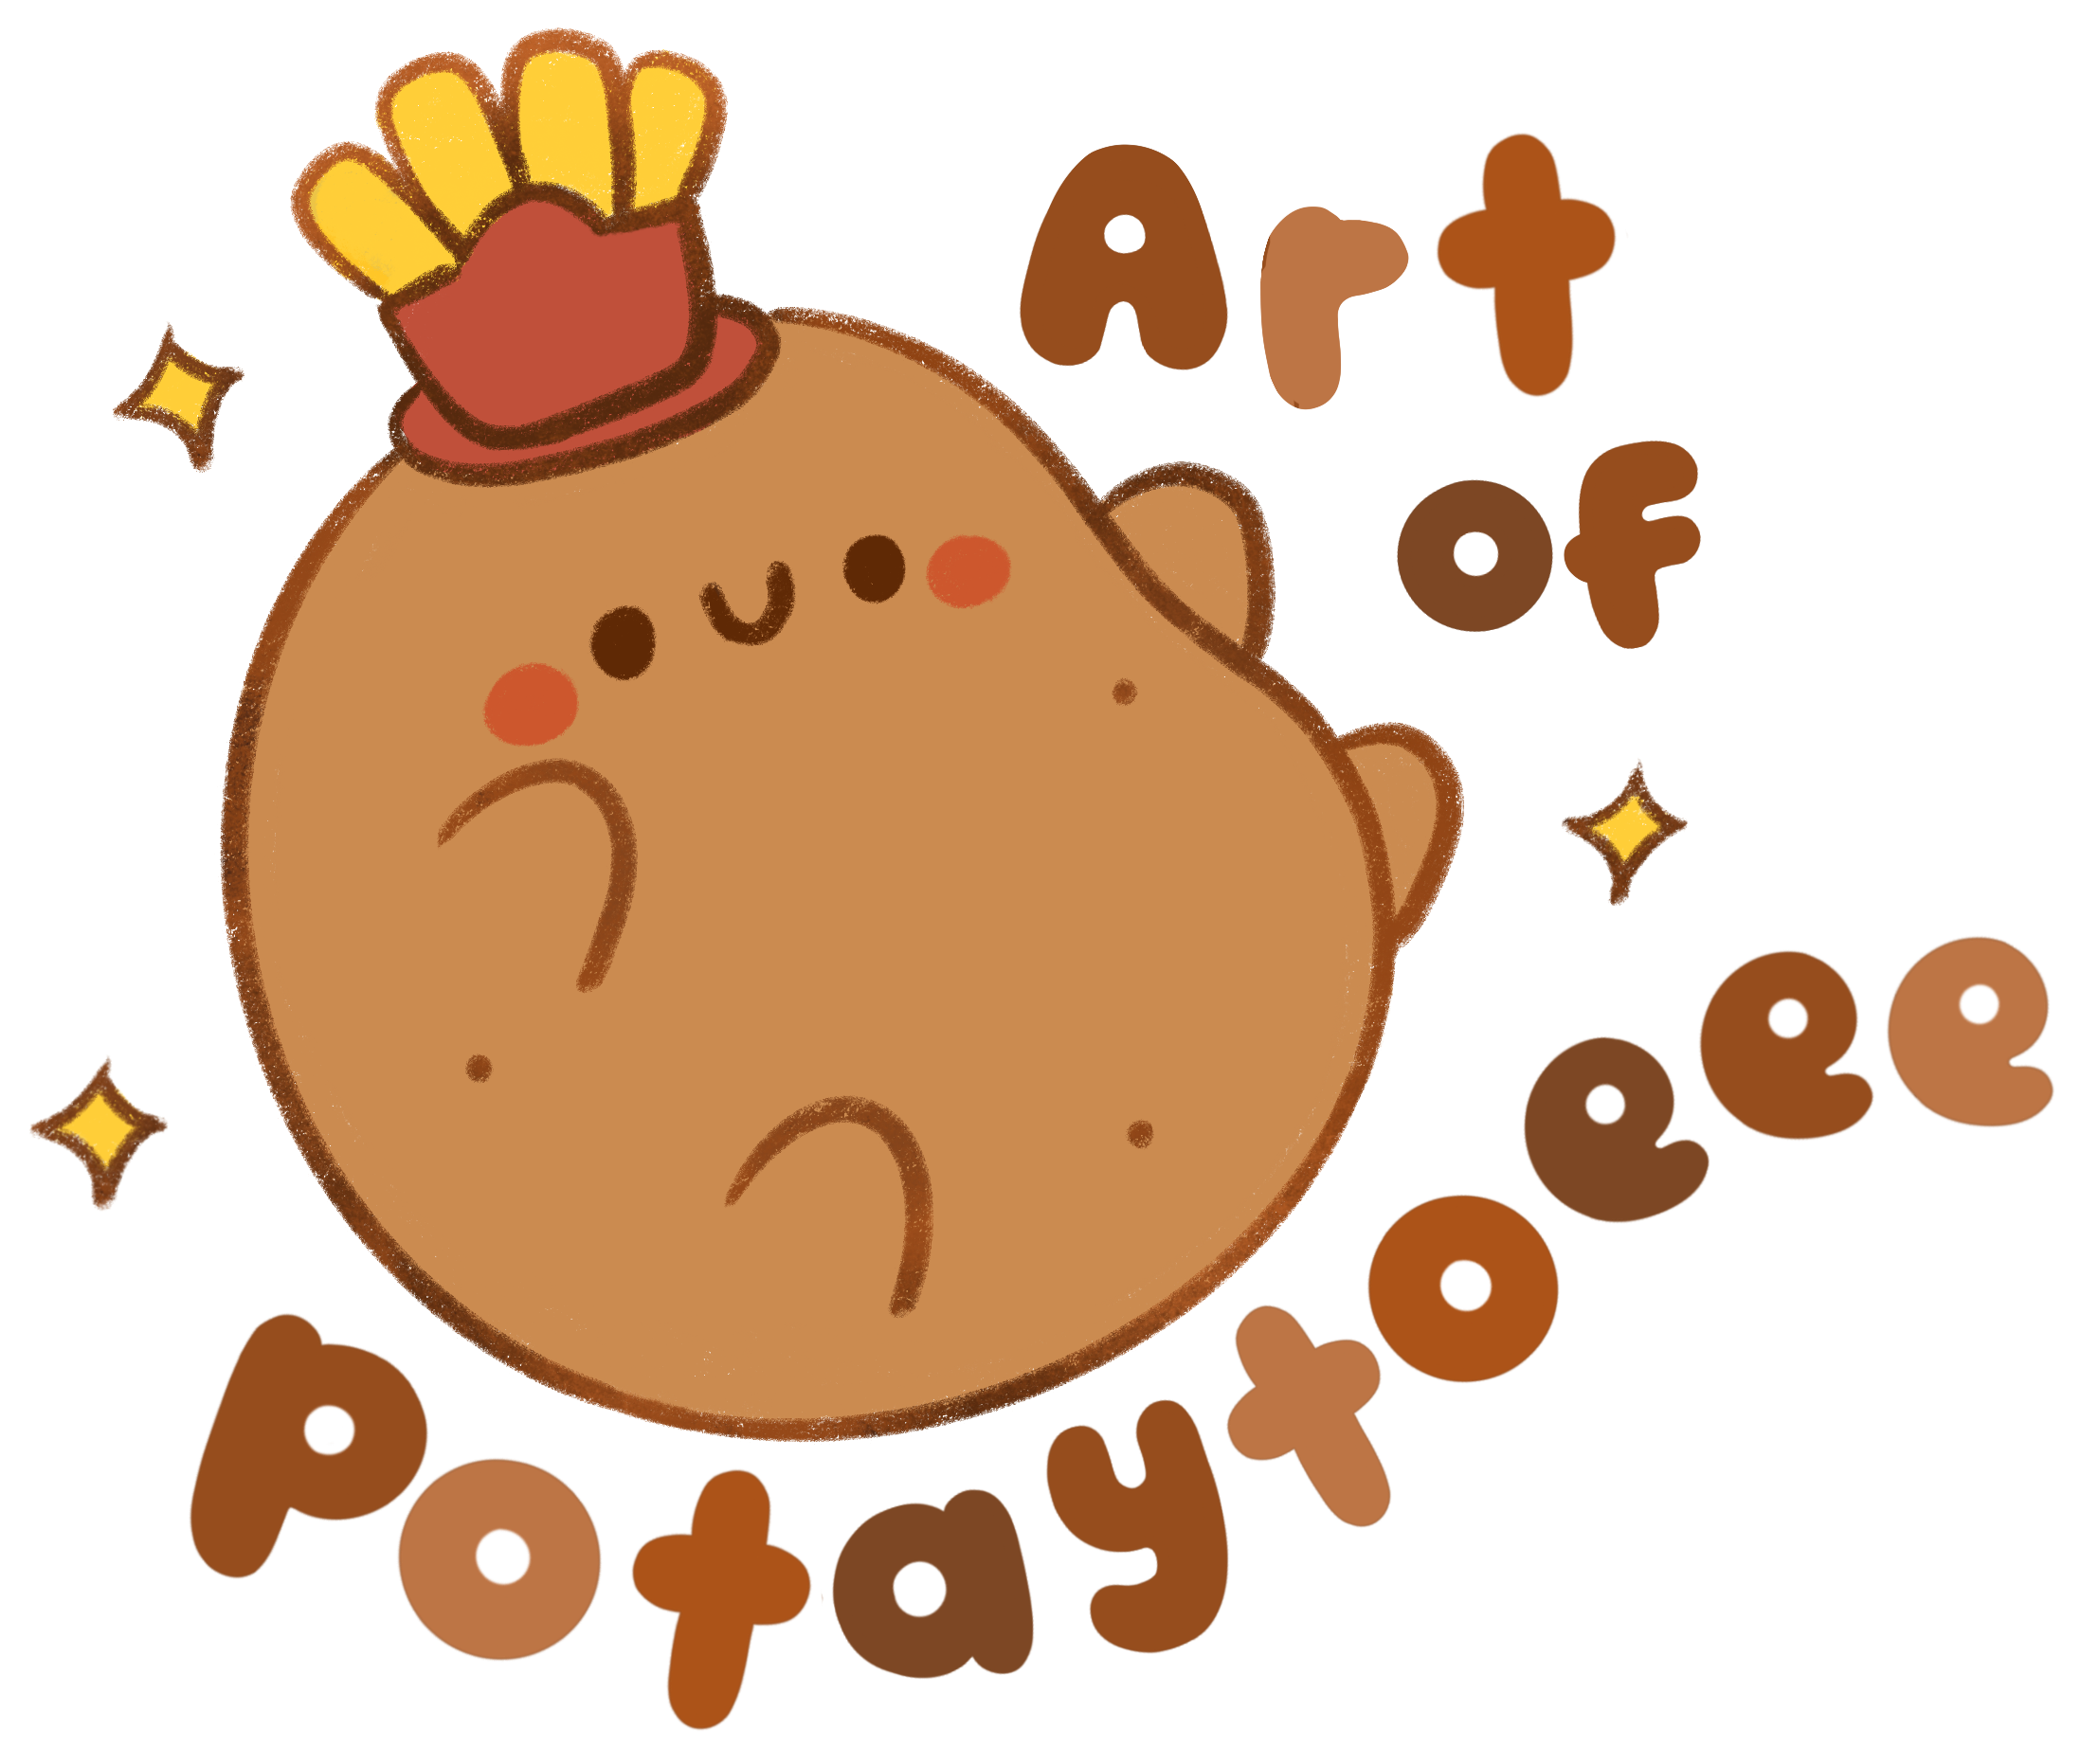 Art of Potaytoeee